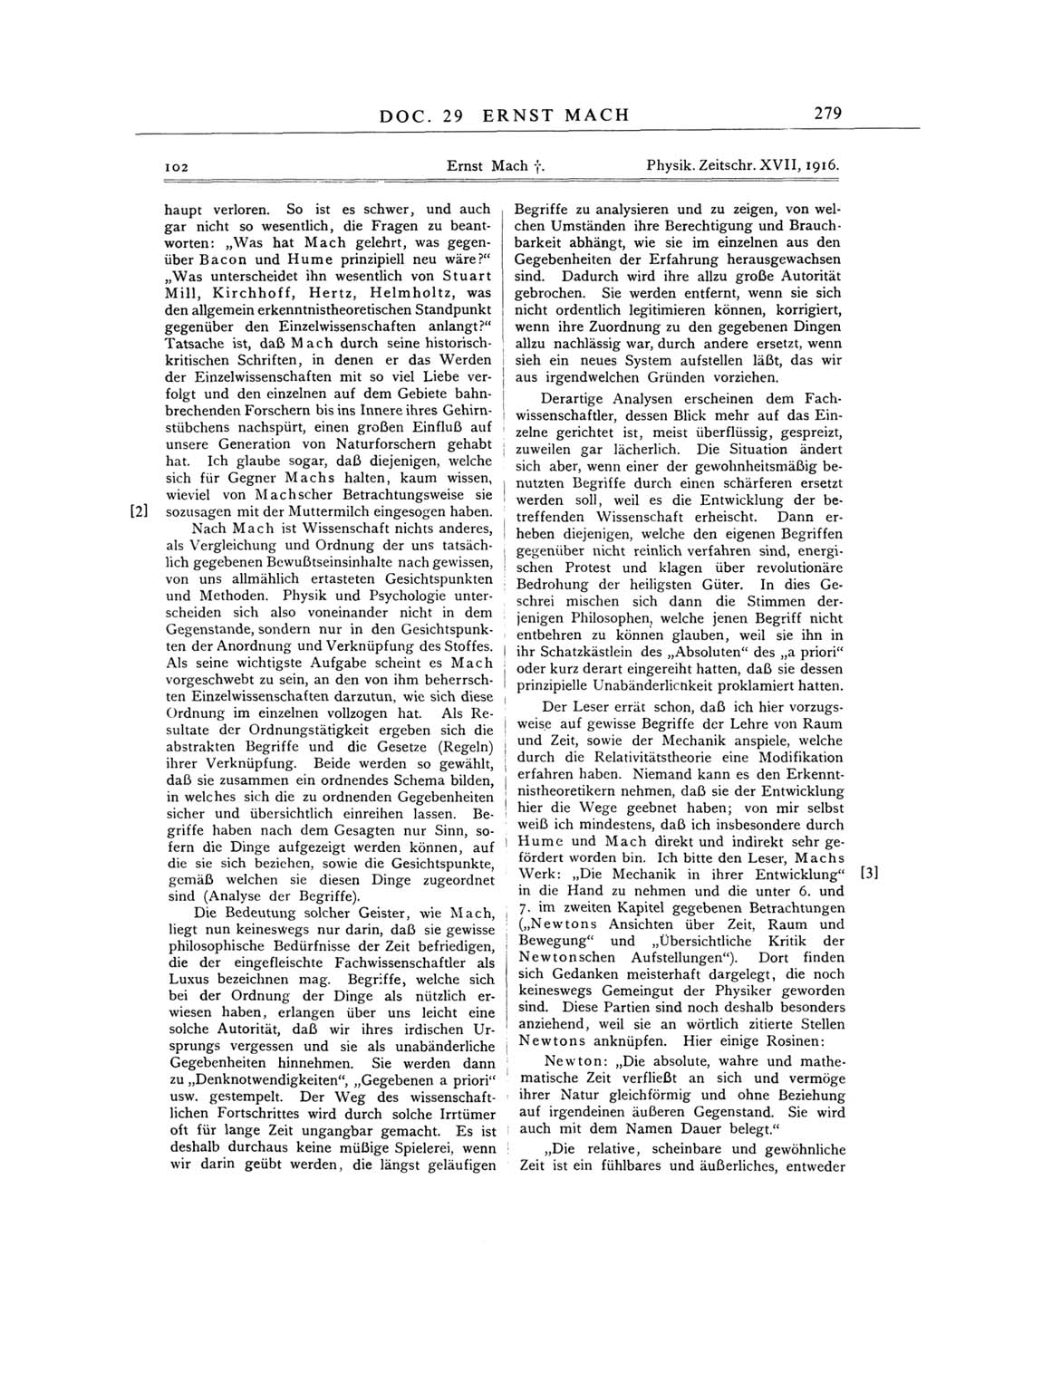 Volume 6: The Berlin Years: Writings, 1914-1917 page 279